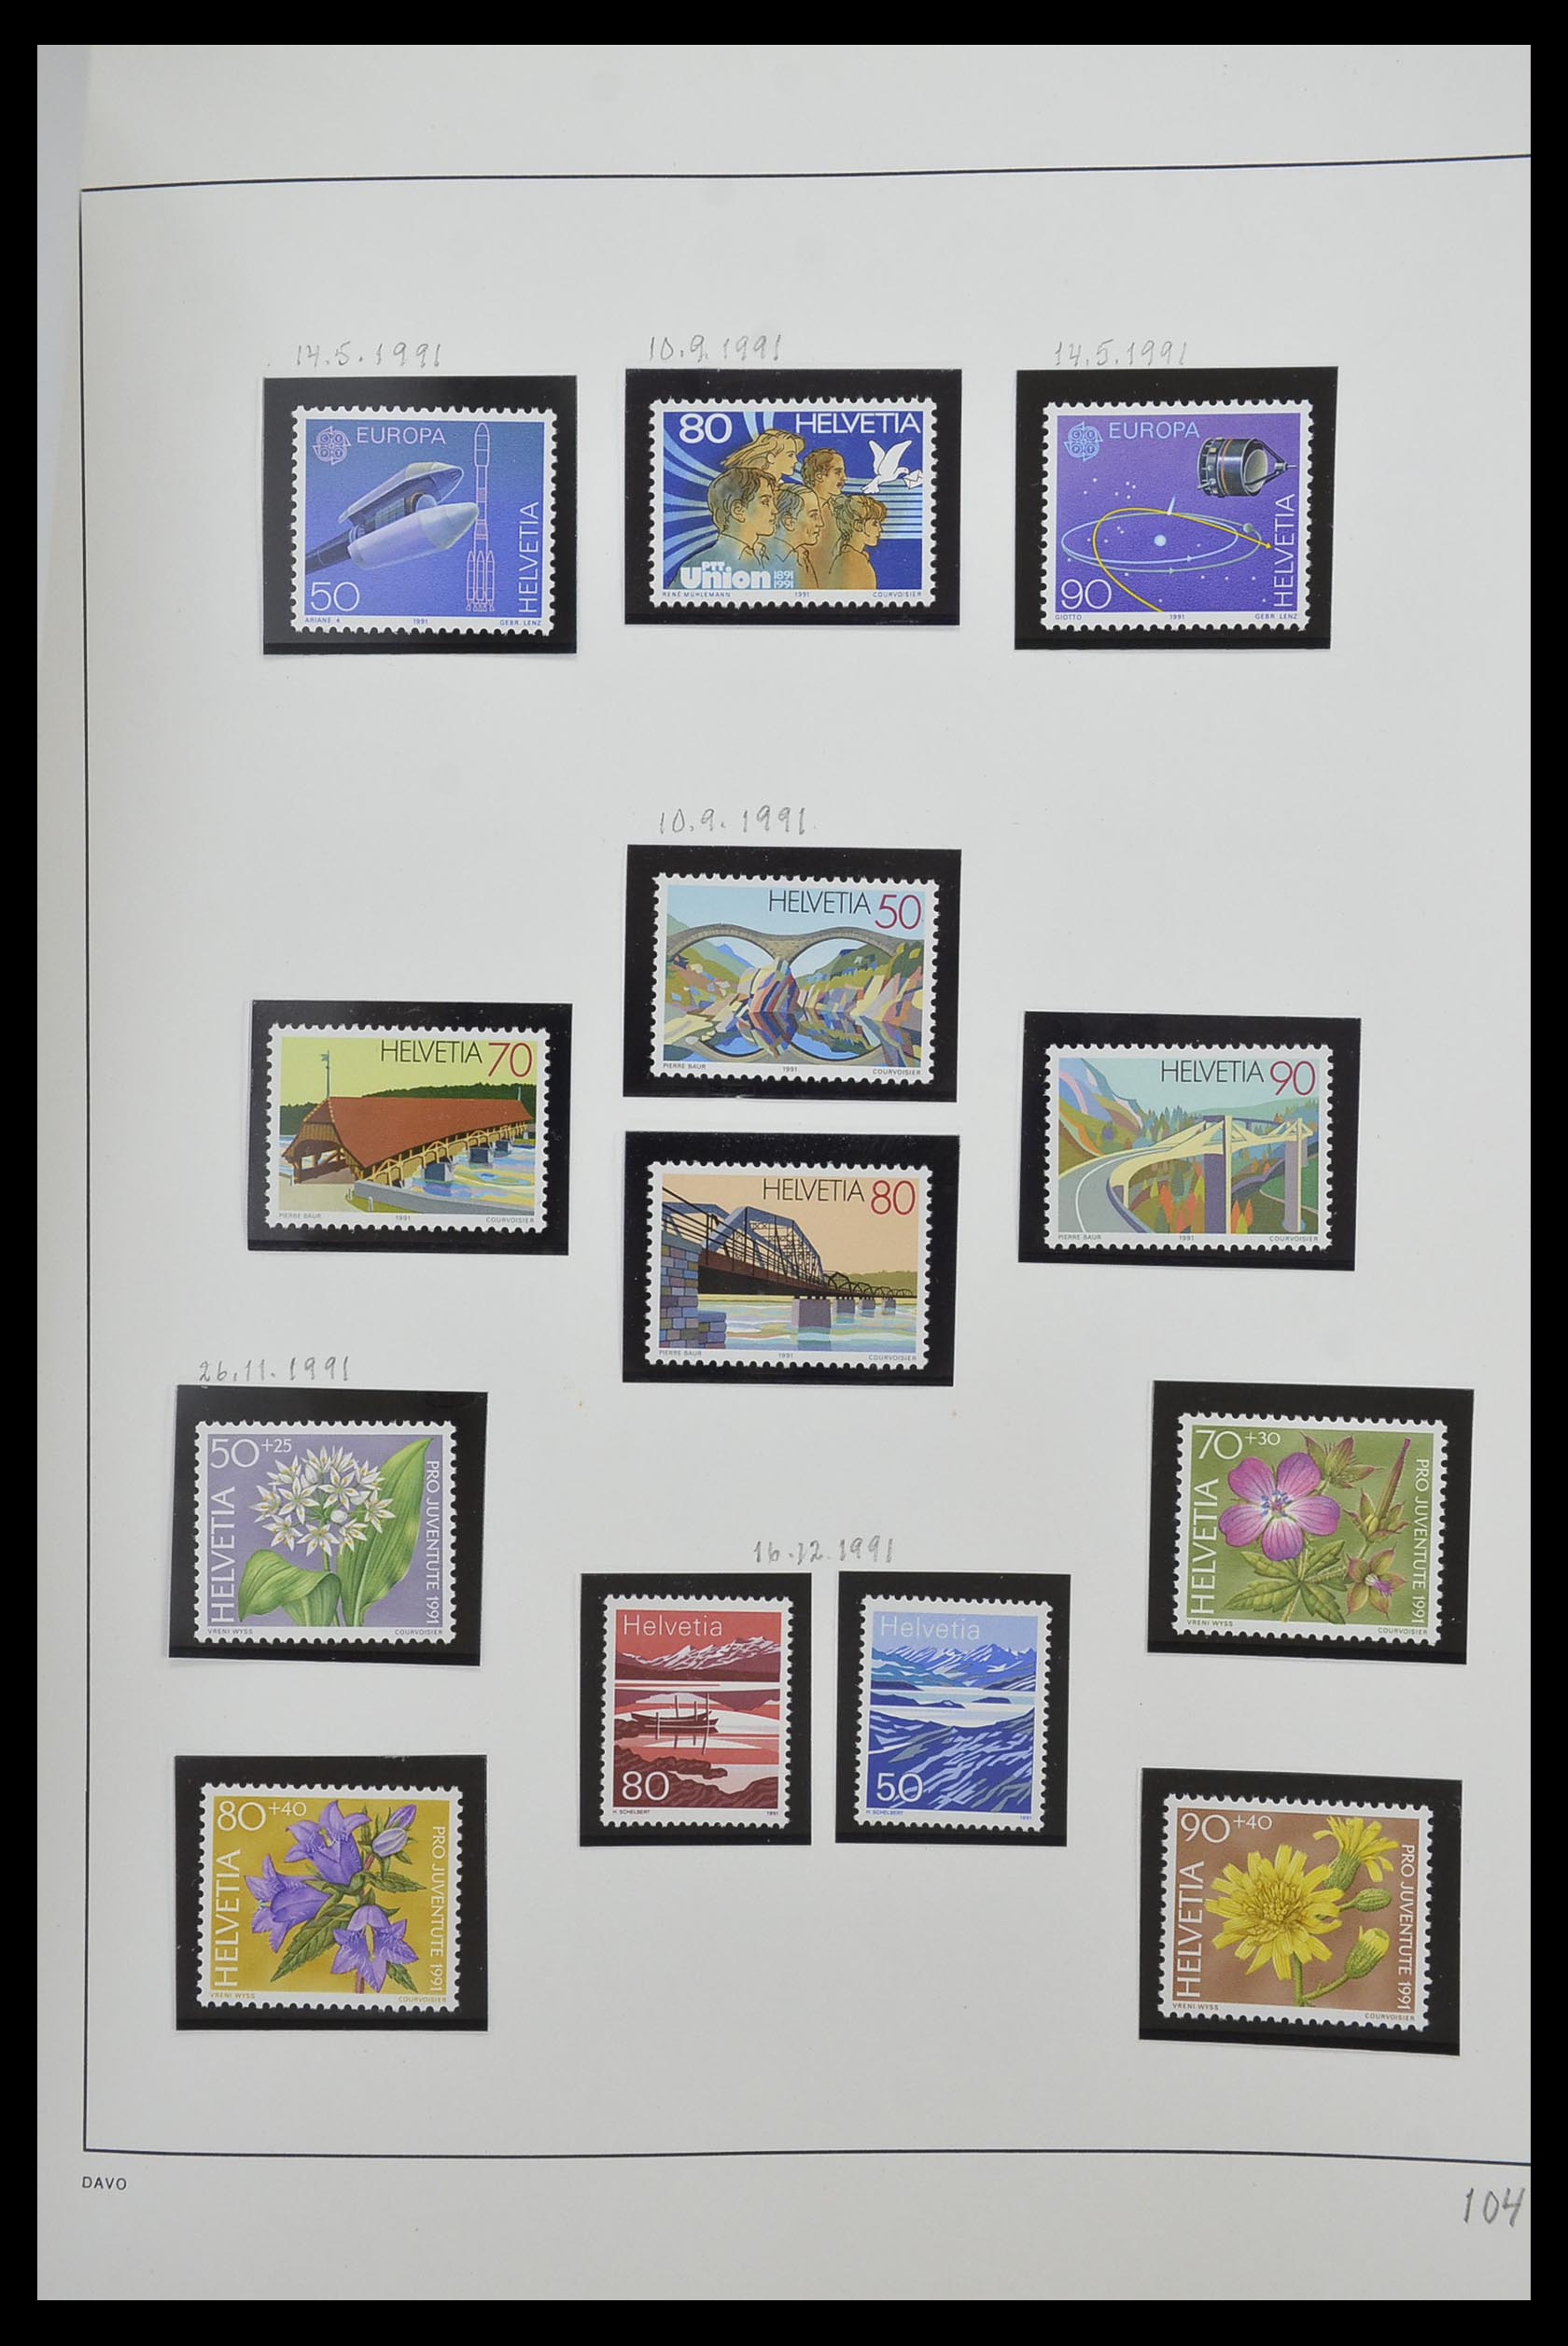 33556 106 - Stamp collection 33556 Switzerland 1862-2000.